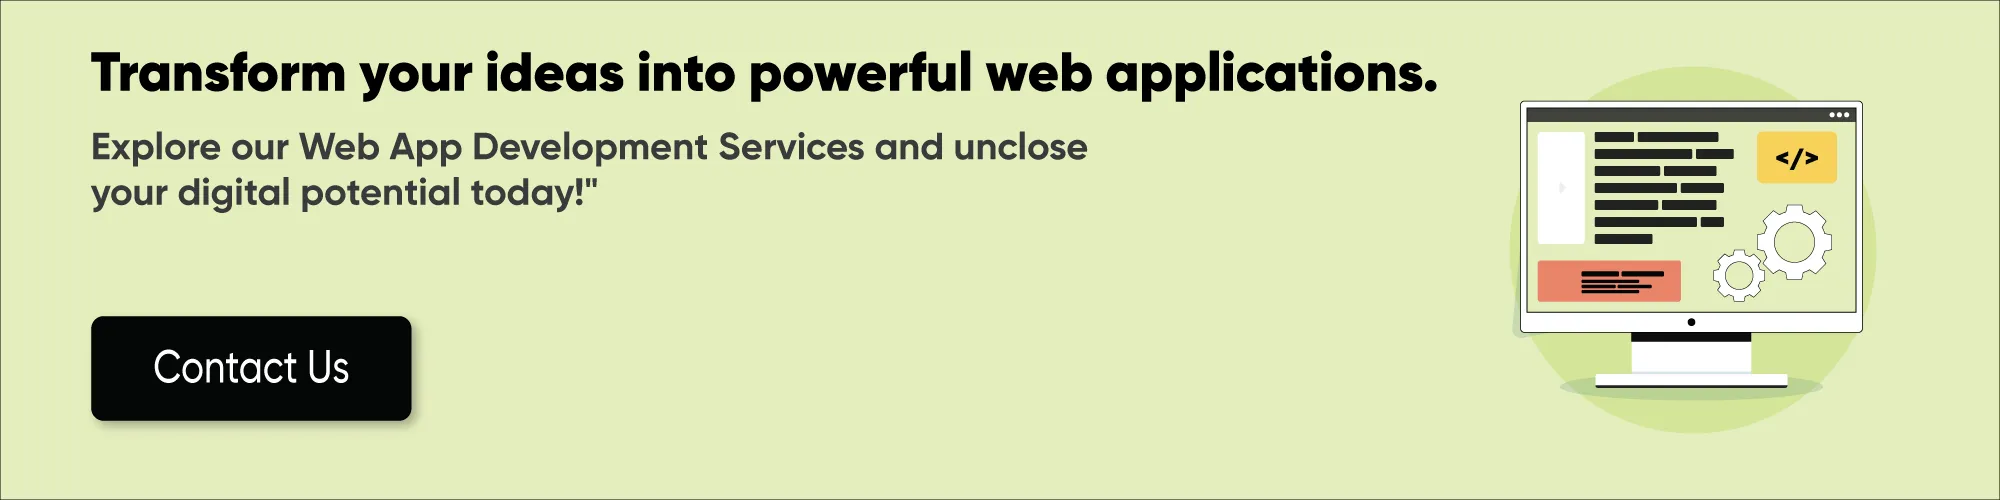 Powerful web application